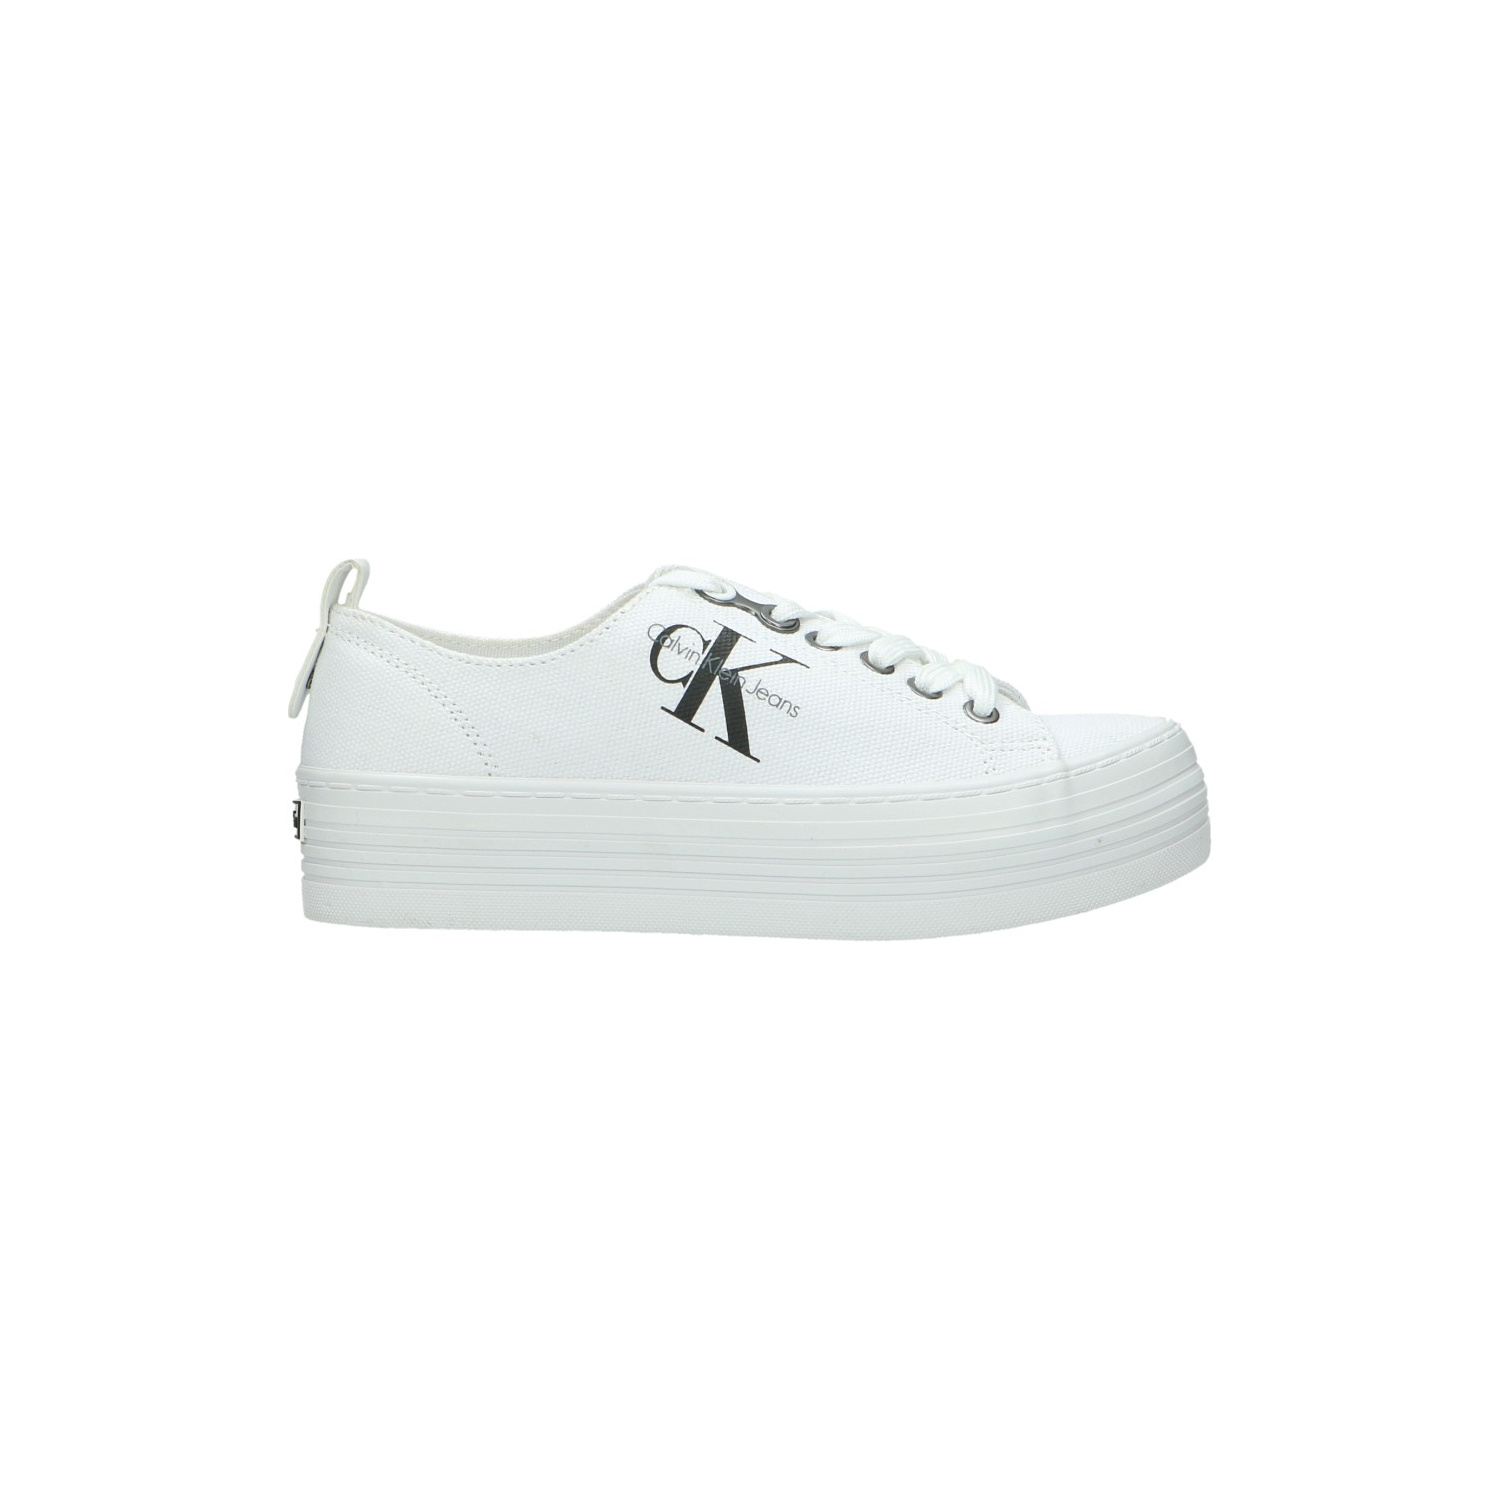 Calvin Klein Jeans Low sneaker white - Low sneakers - Shoes - Ladies -  